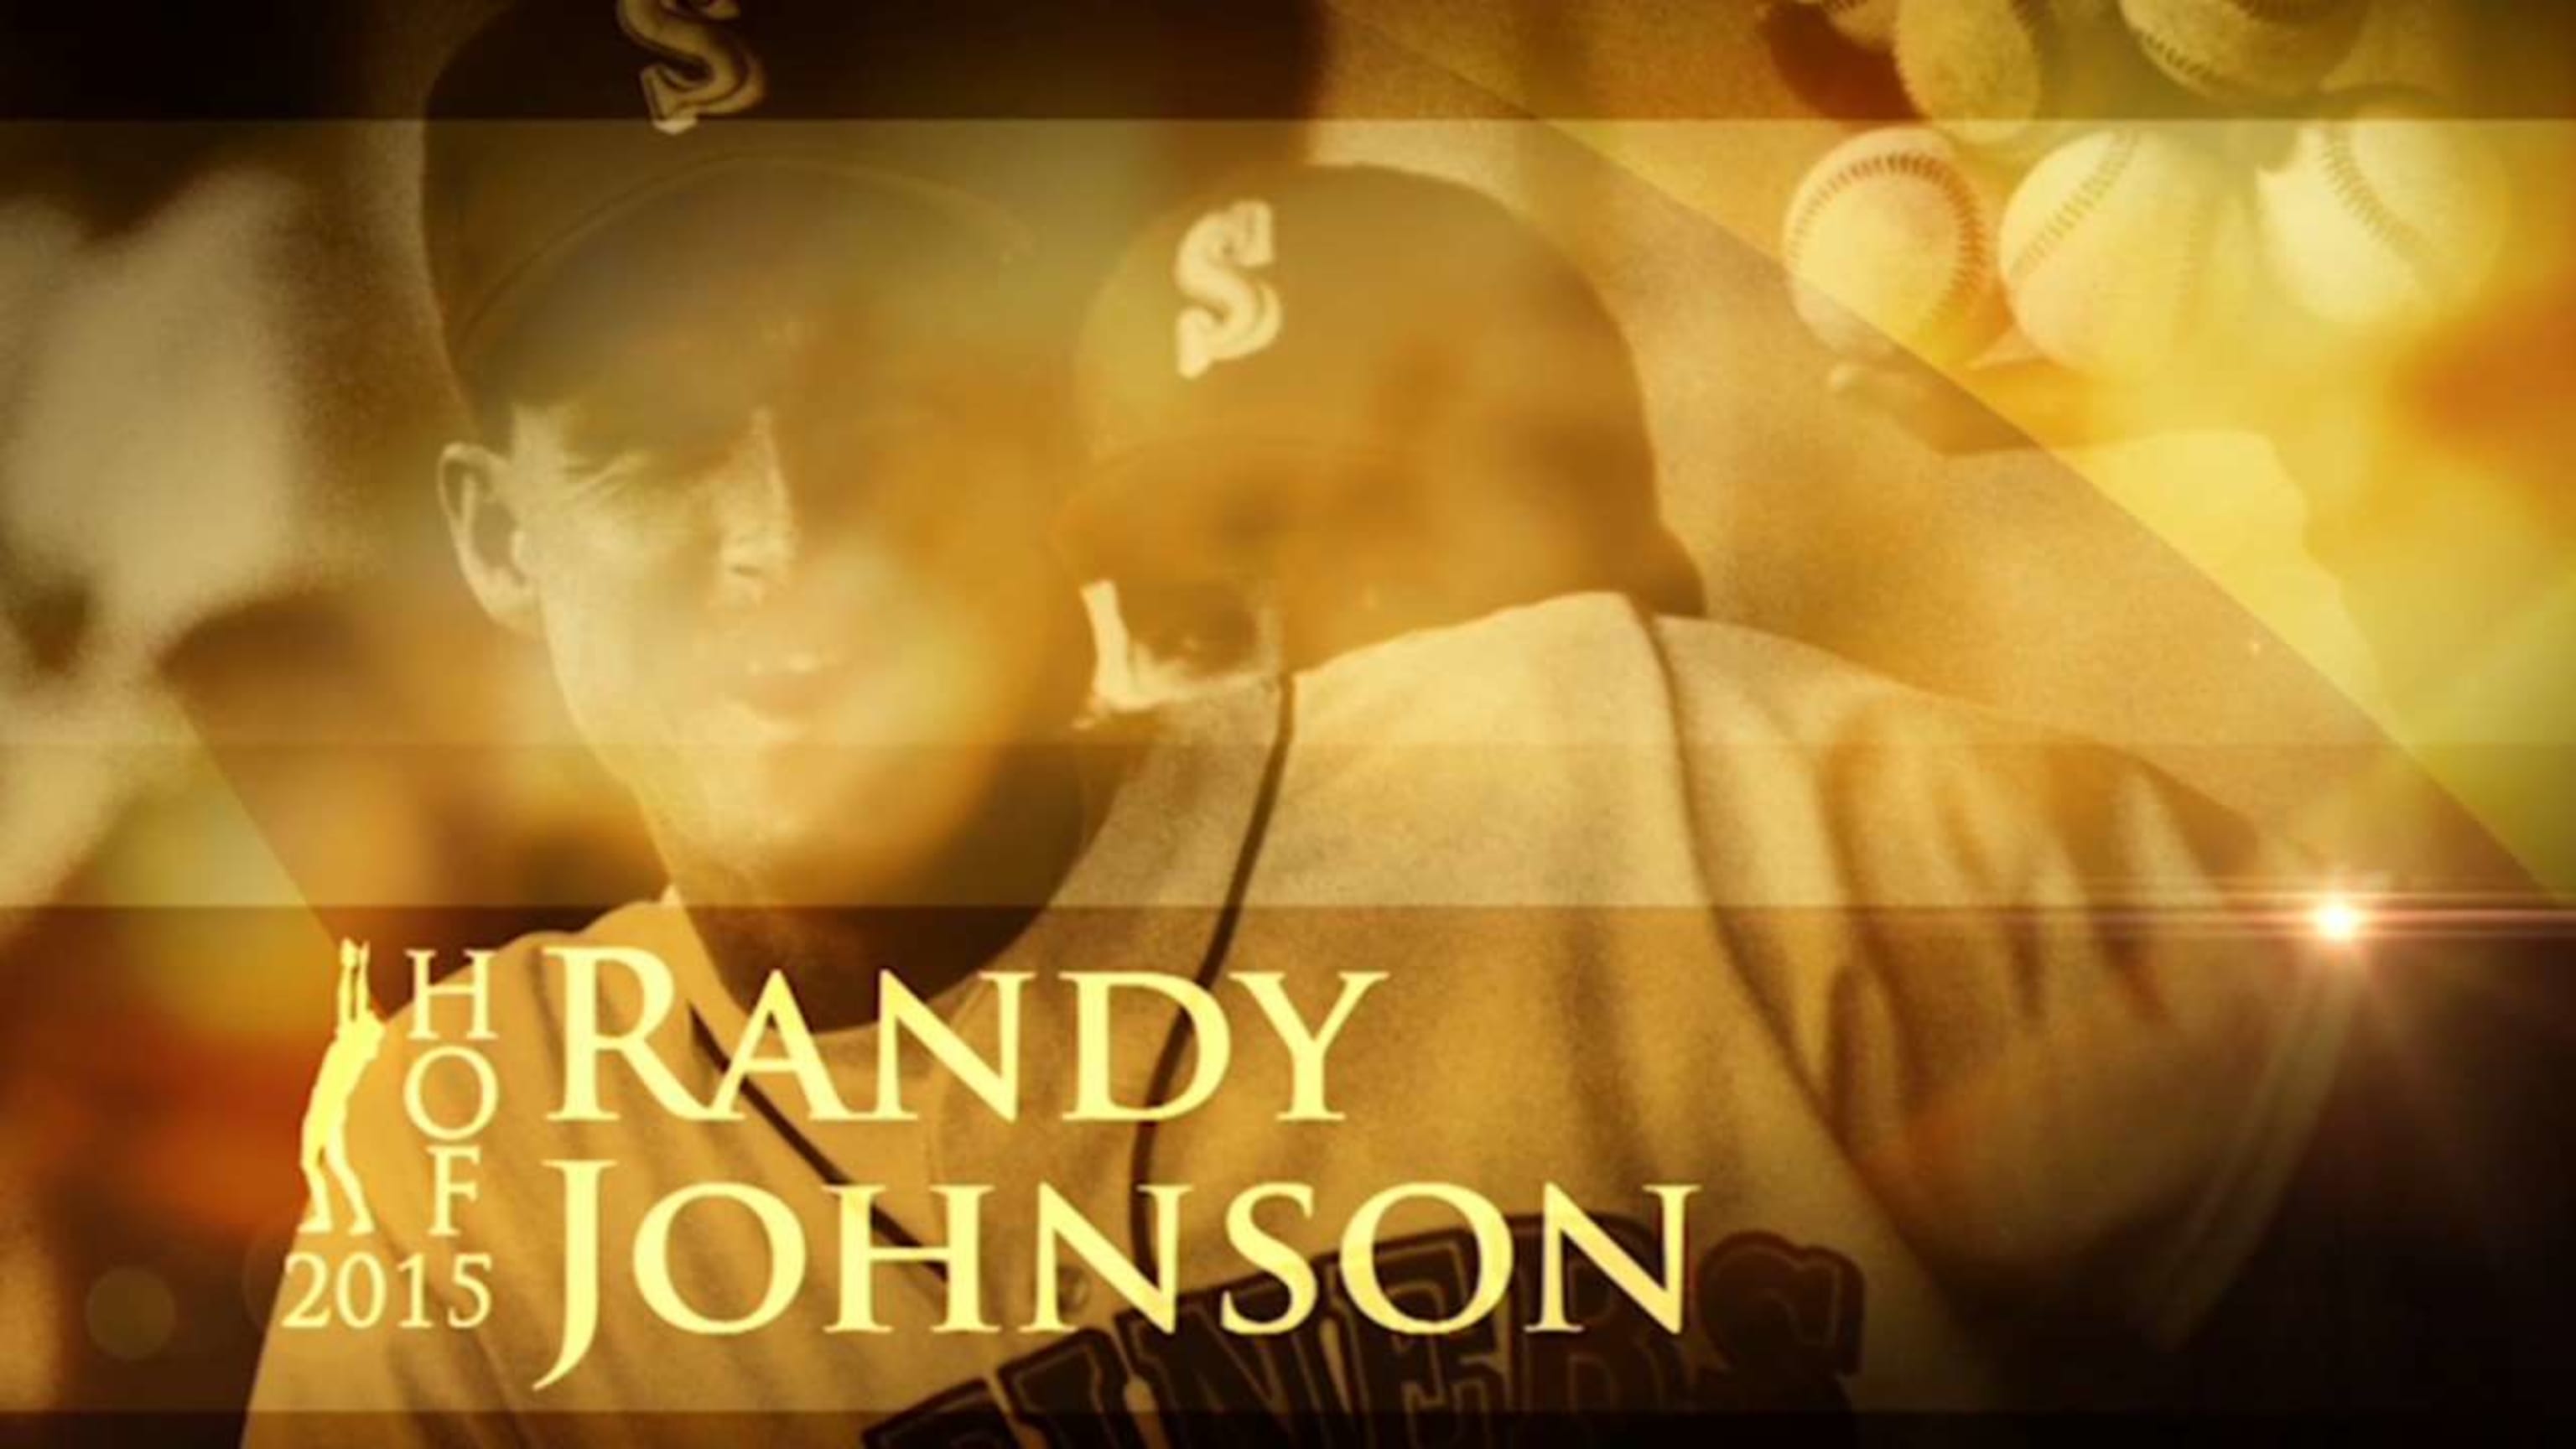 MLB - Randy Johnson: A Hall of Fame tribute - ESPN